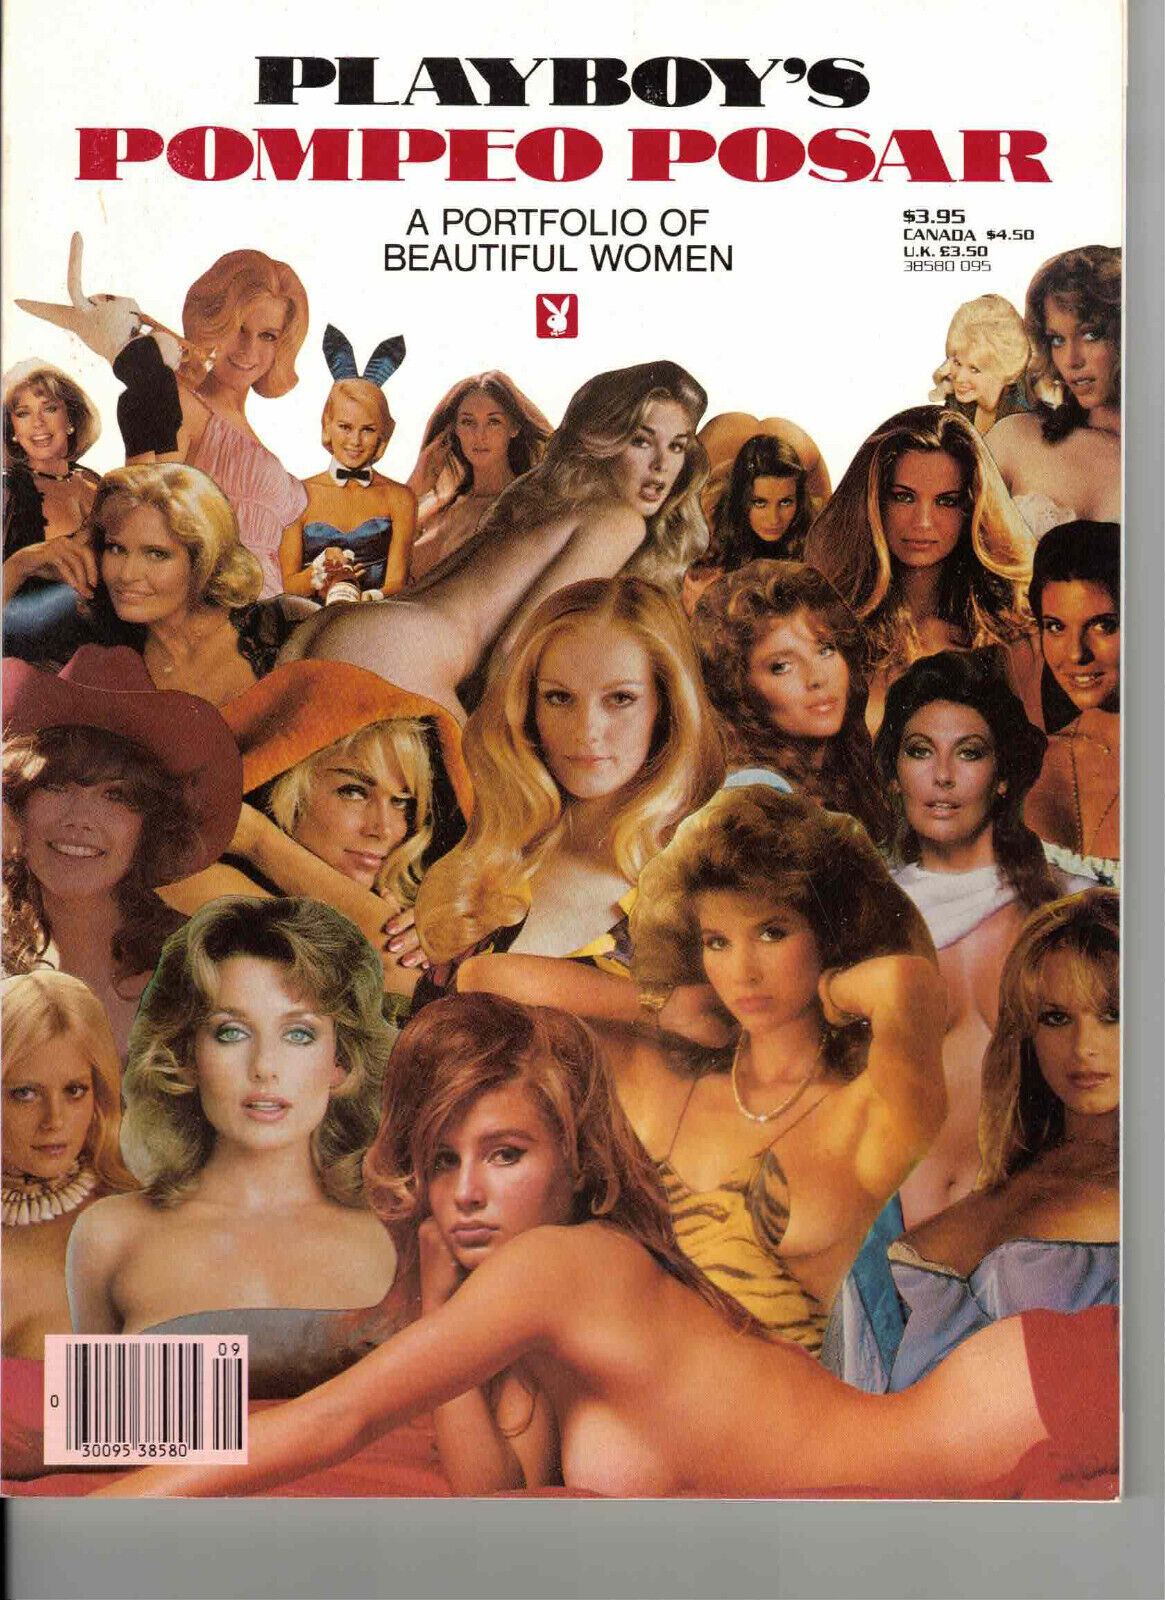 Playboy Pompeo Posar 1985 A Portfolio Of Beautiful Women 112 Pages 1985